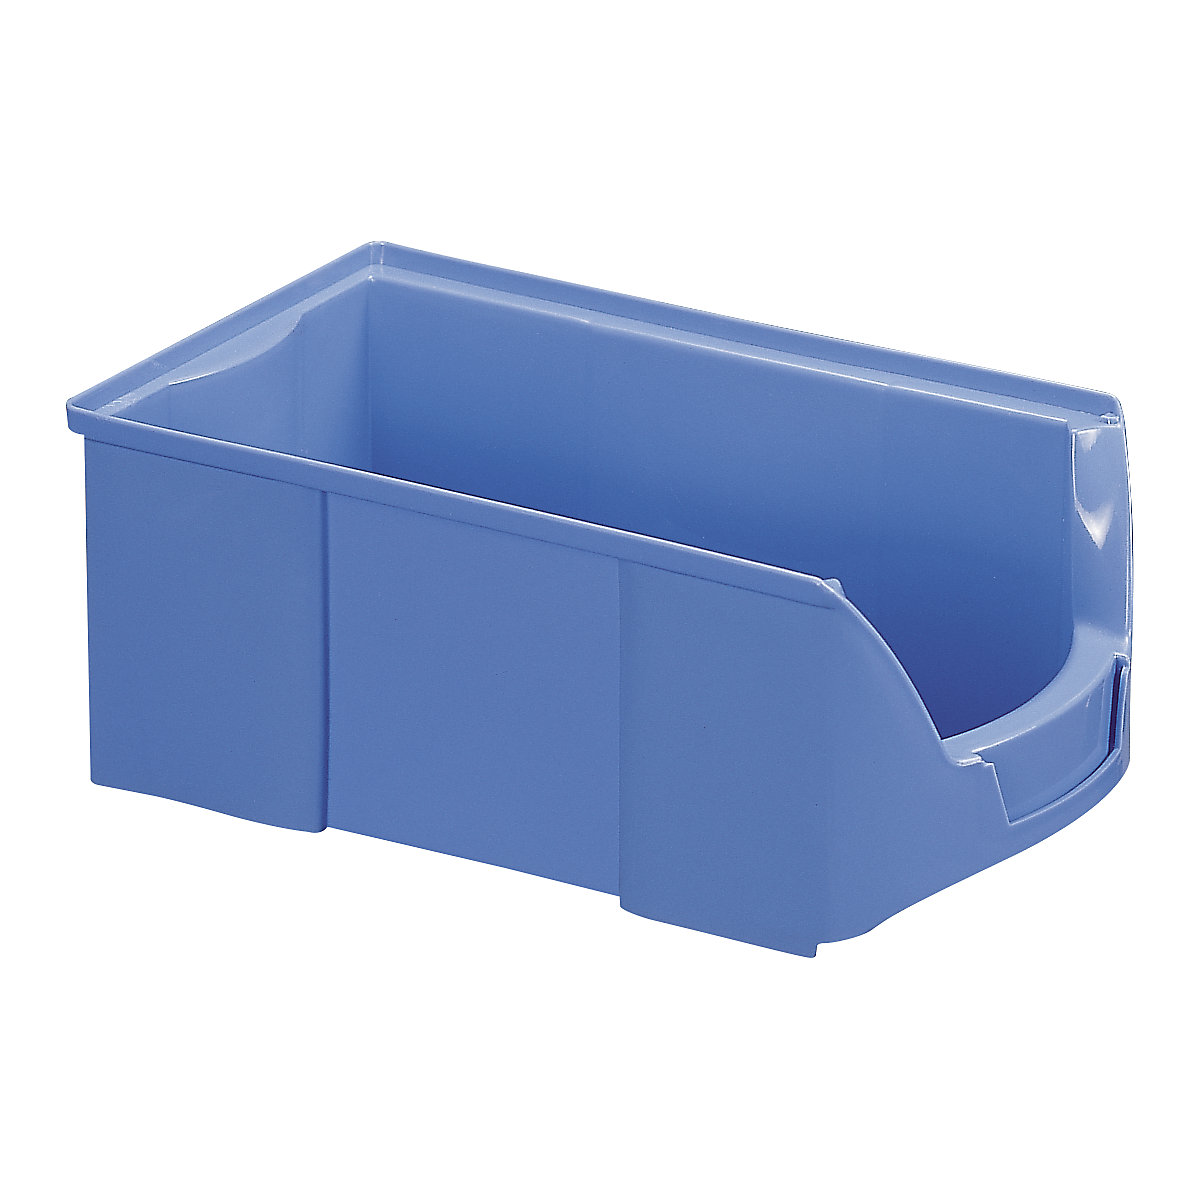 FUTURA open fronted storage bin made of polyethylene